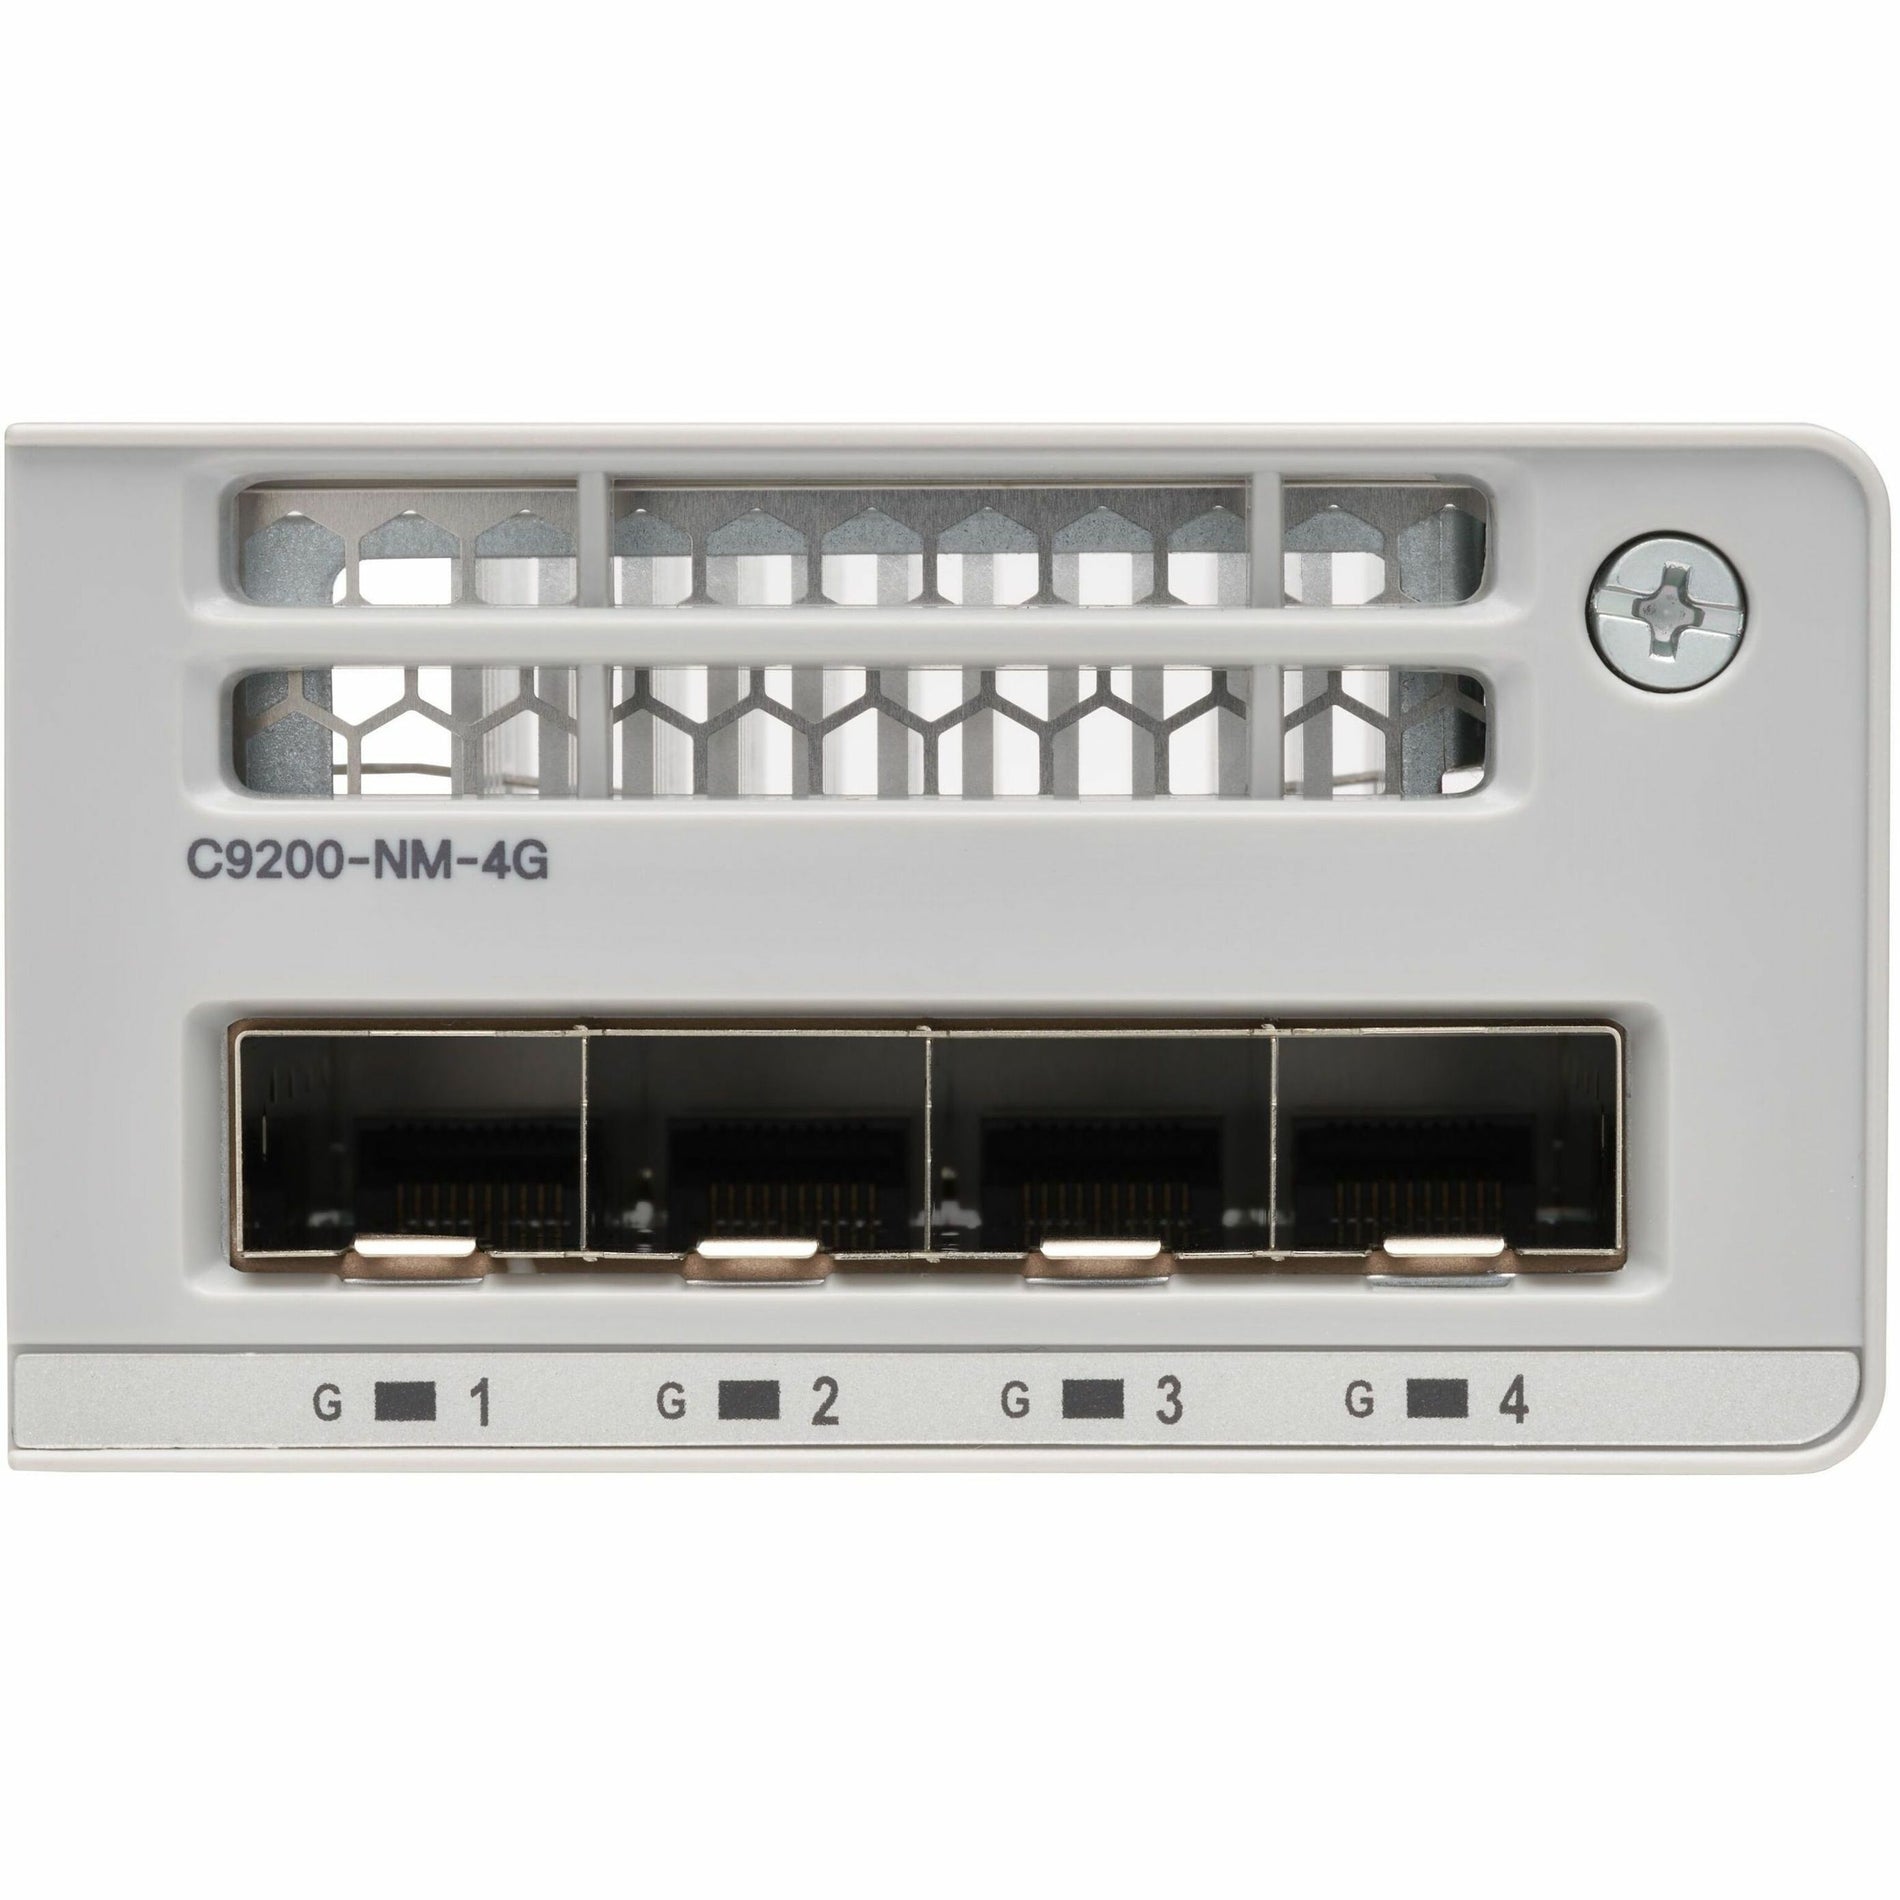 Cisco C9200-NM-4X= 4 x 1G/10G Network Module, High-Speed Data Networking